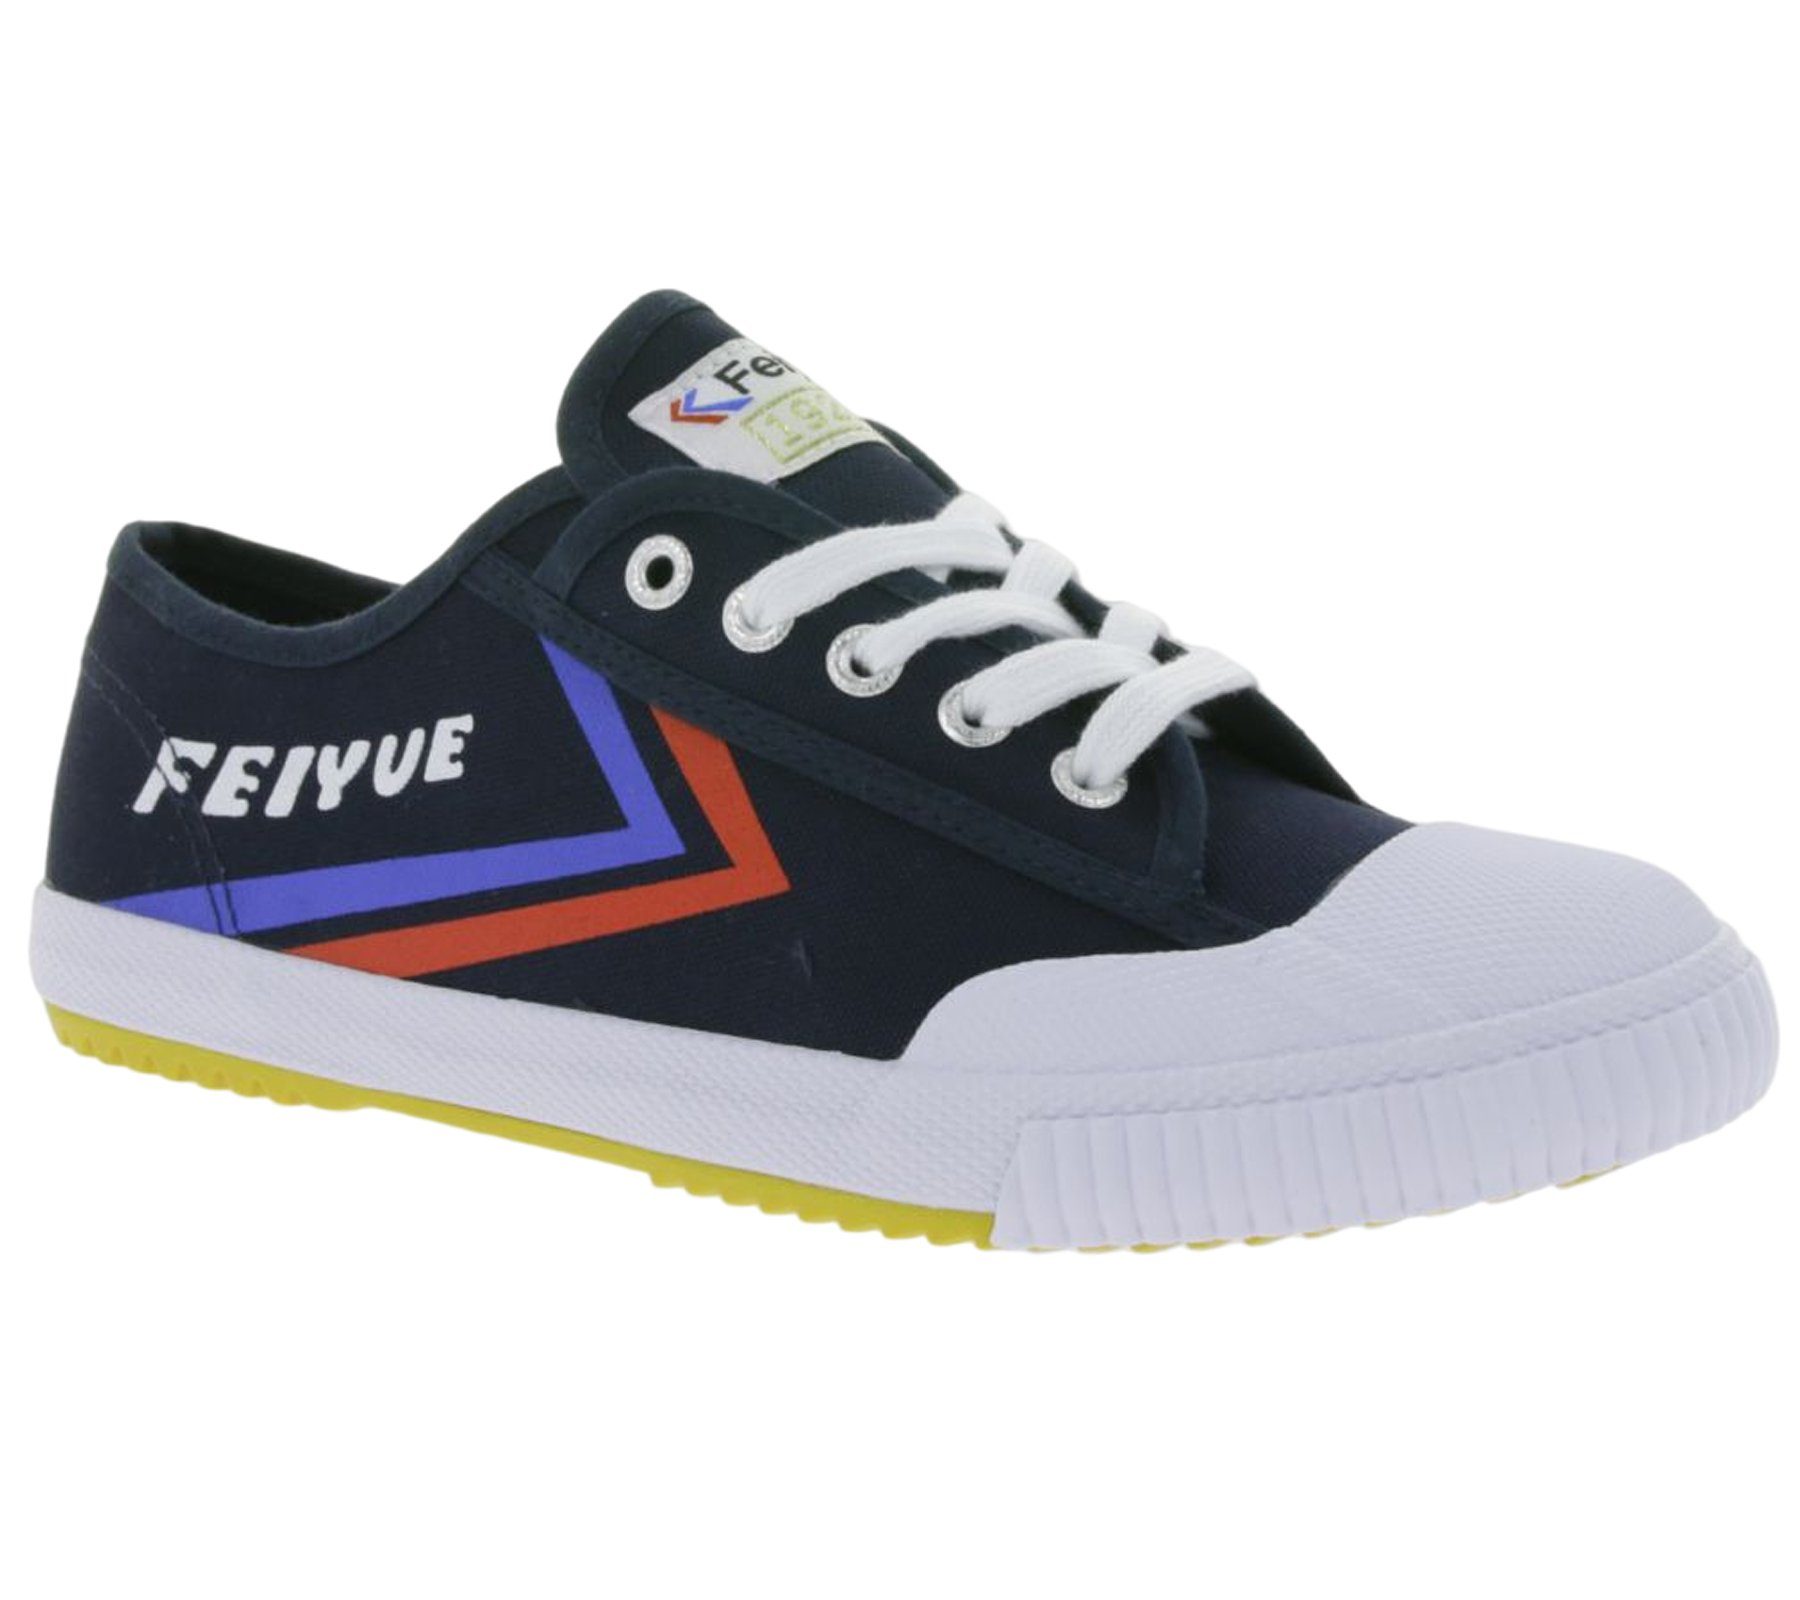 Plimsoll-Design für Navy-Blau Feiyue Fe Lo Sneaker in Sneaker 1920 Kampfkunst Sportschuhe Fitness-Schuhe Canvas Feiyue